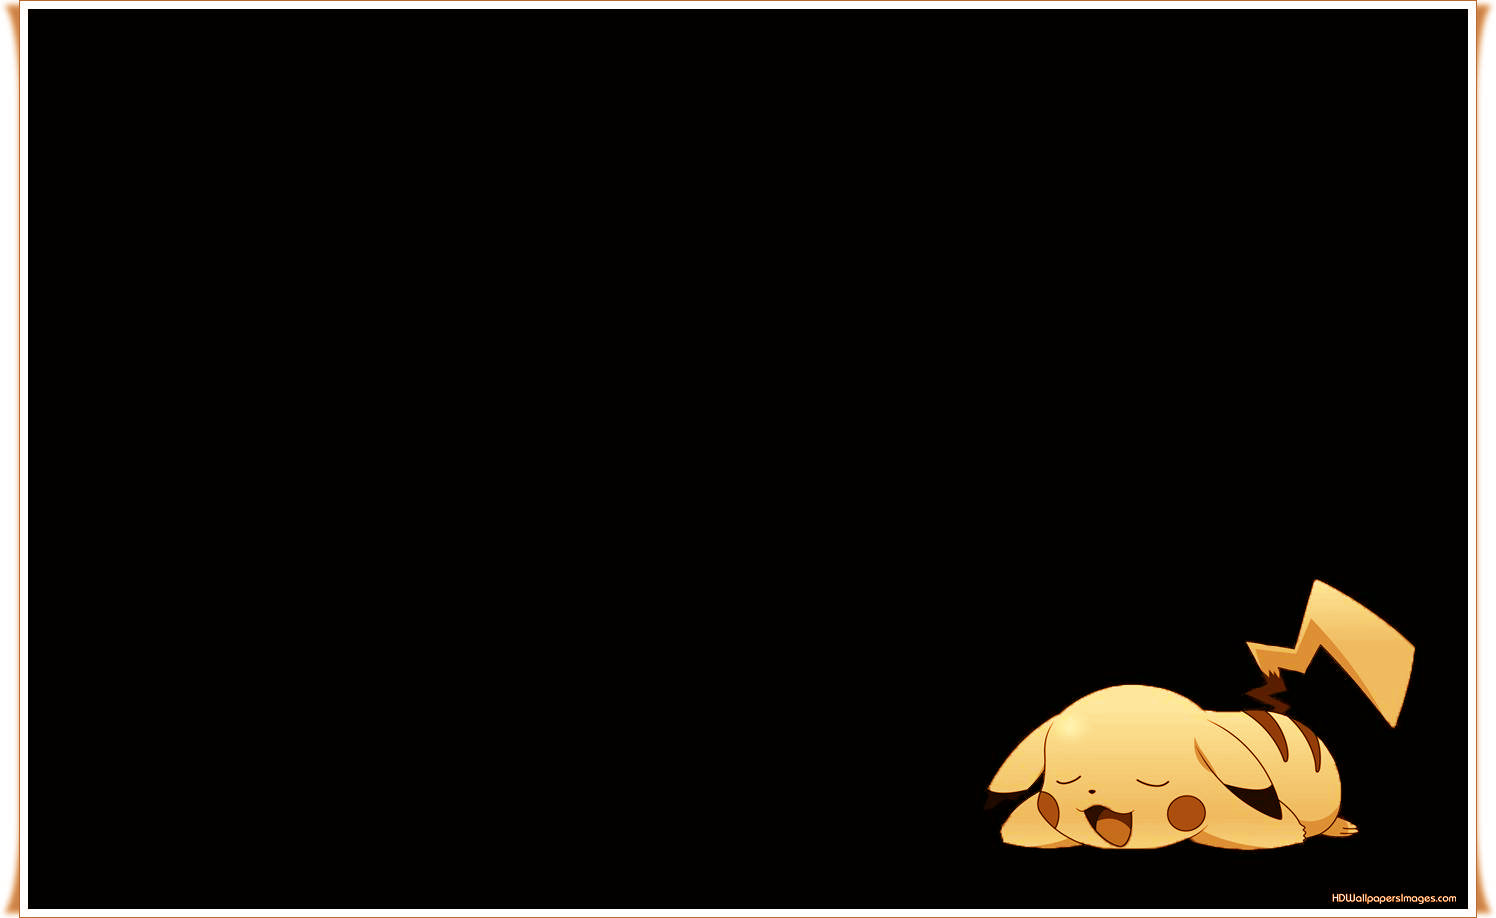 Sleeping Pikachu Wallpaper HD In Games Imageci